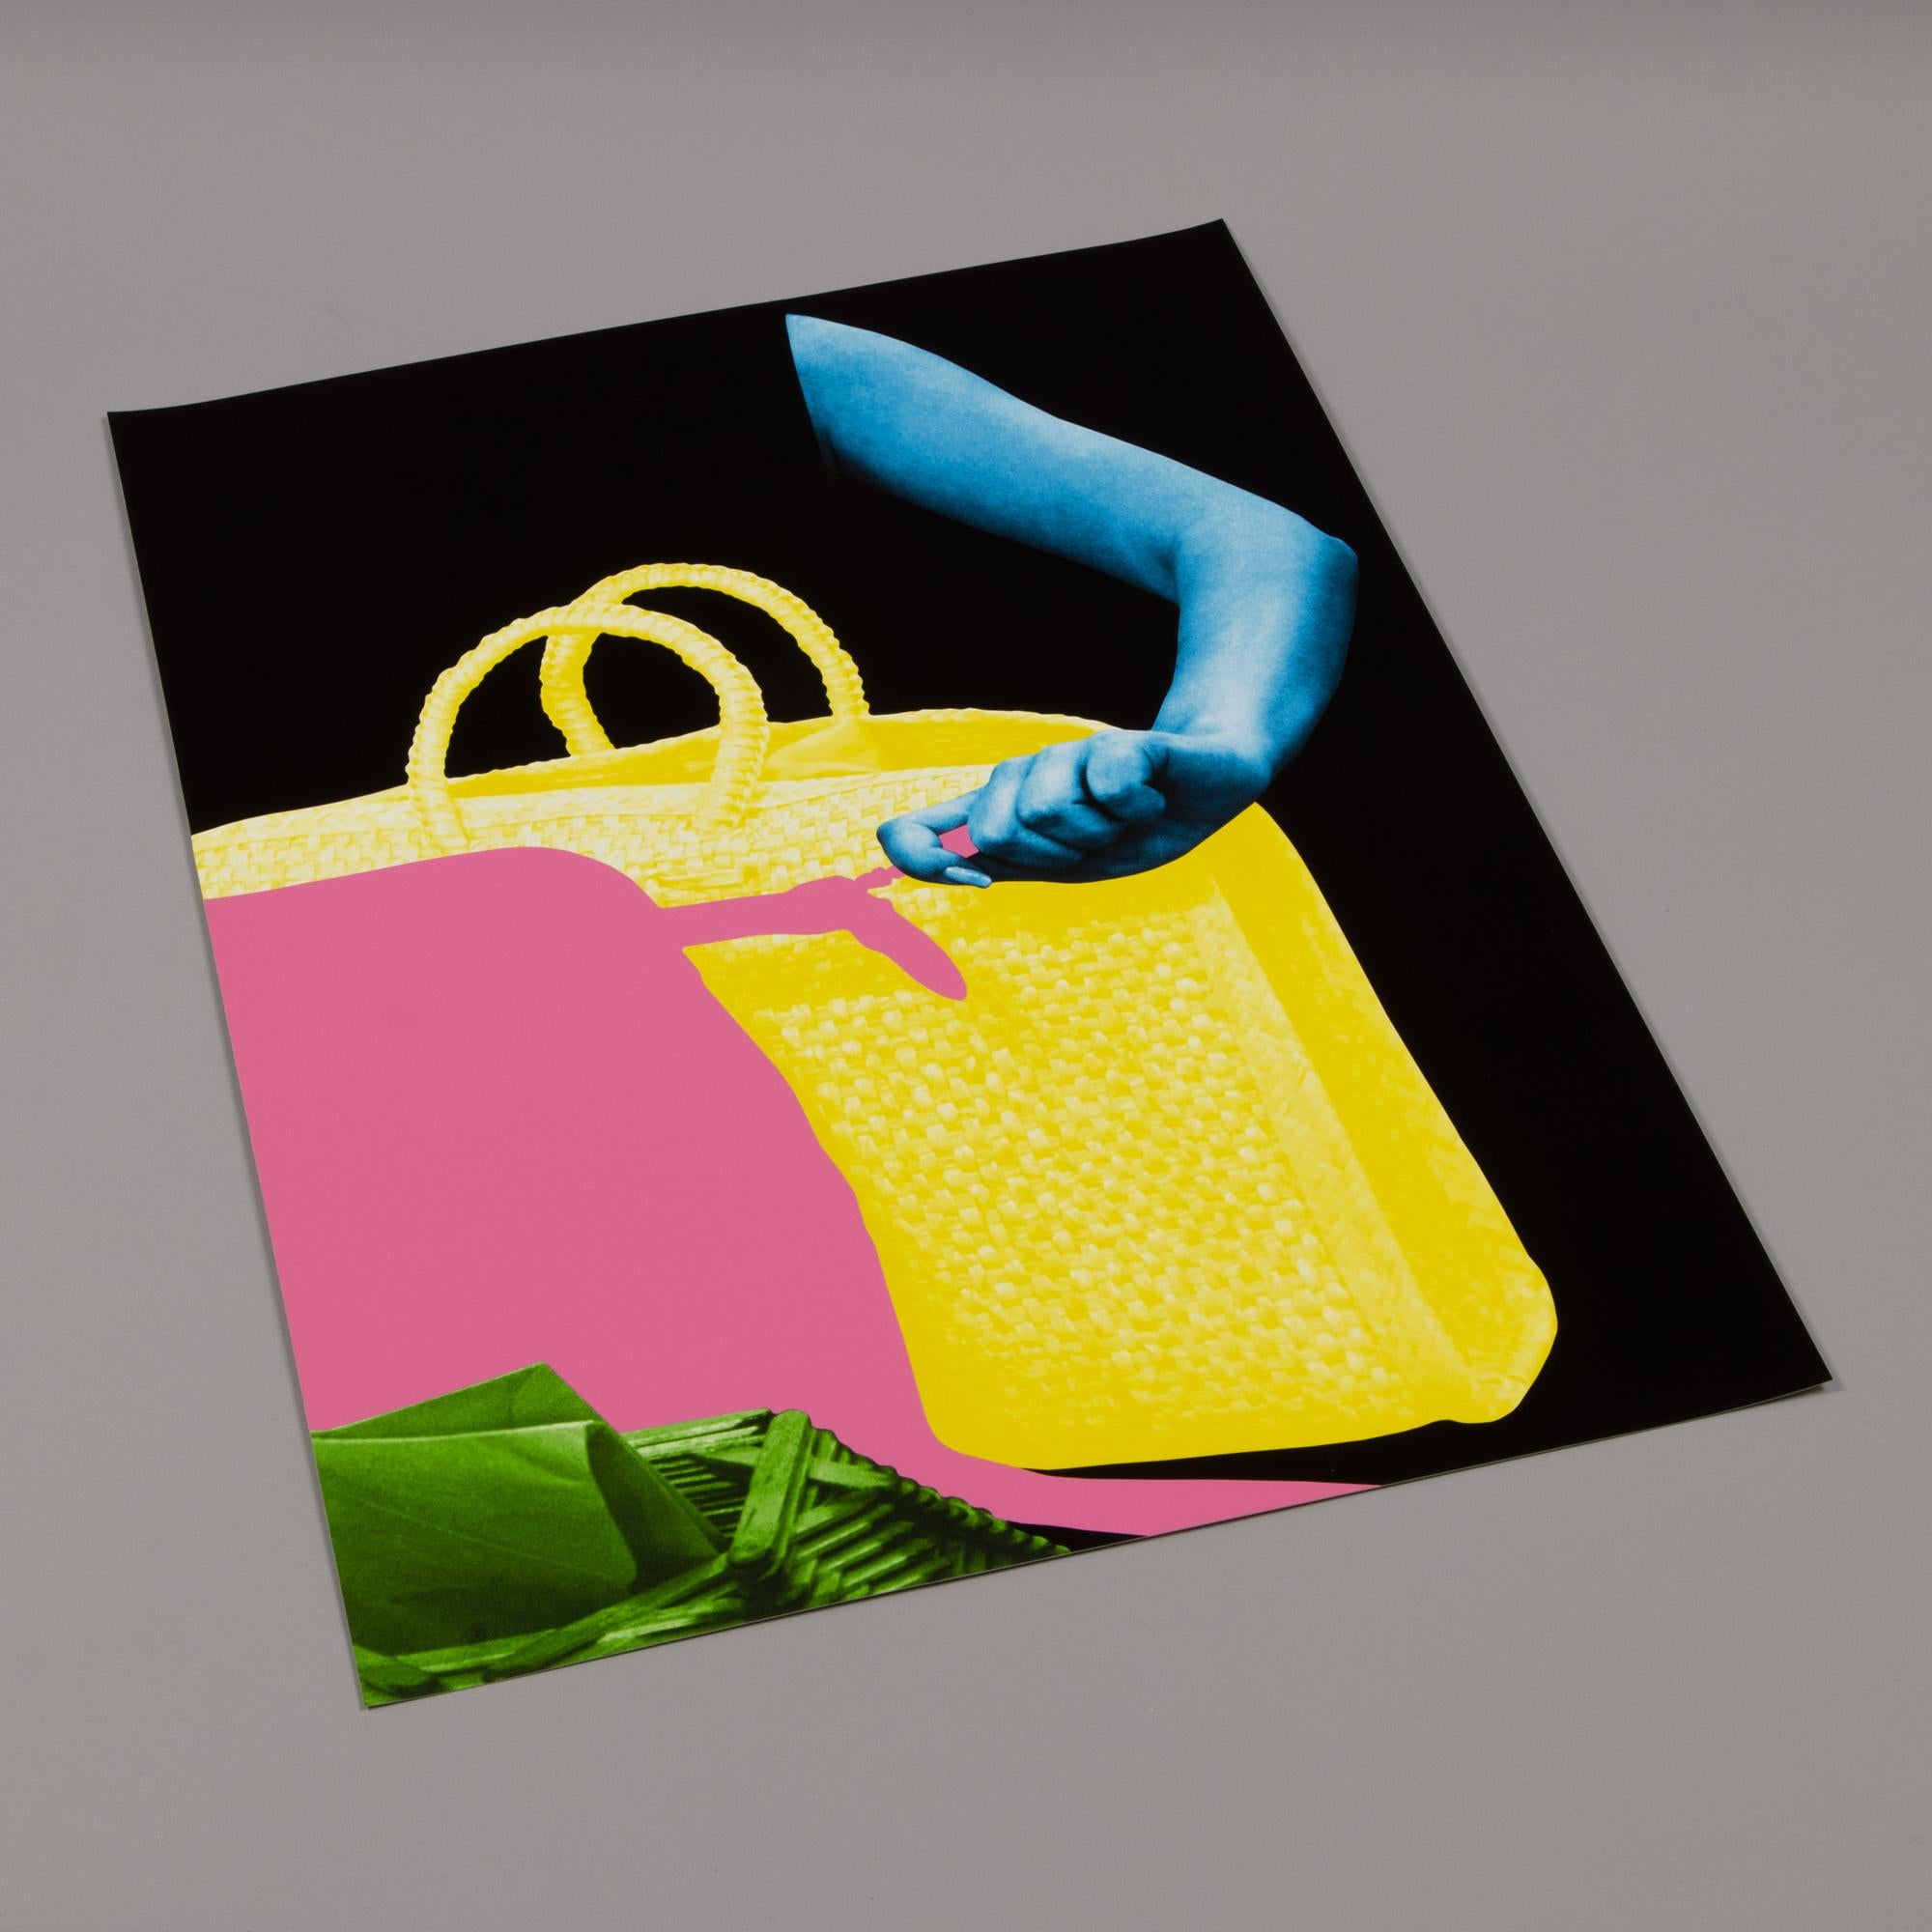 John Baldessari, Two Bags and Envelope Holder - Conceptual Art, Signed Print 2